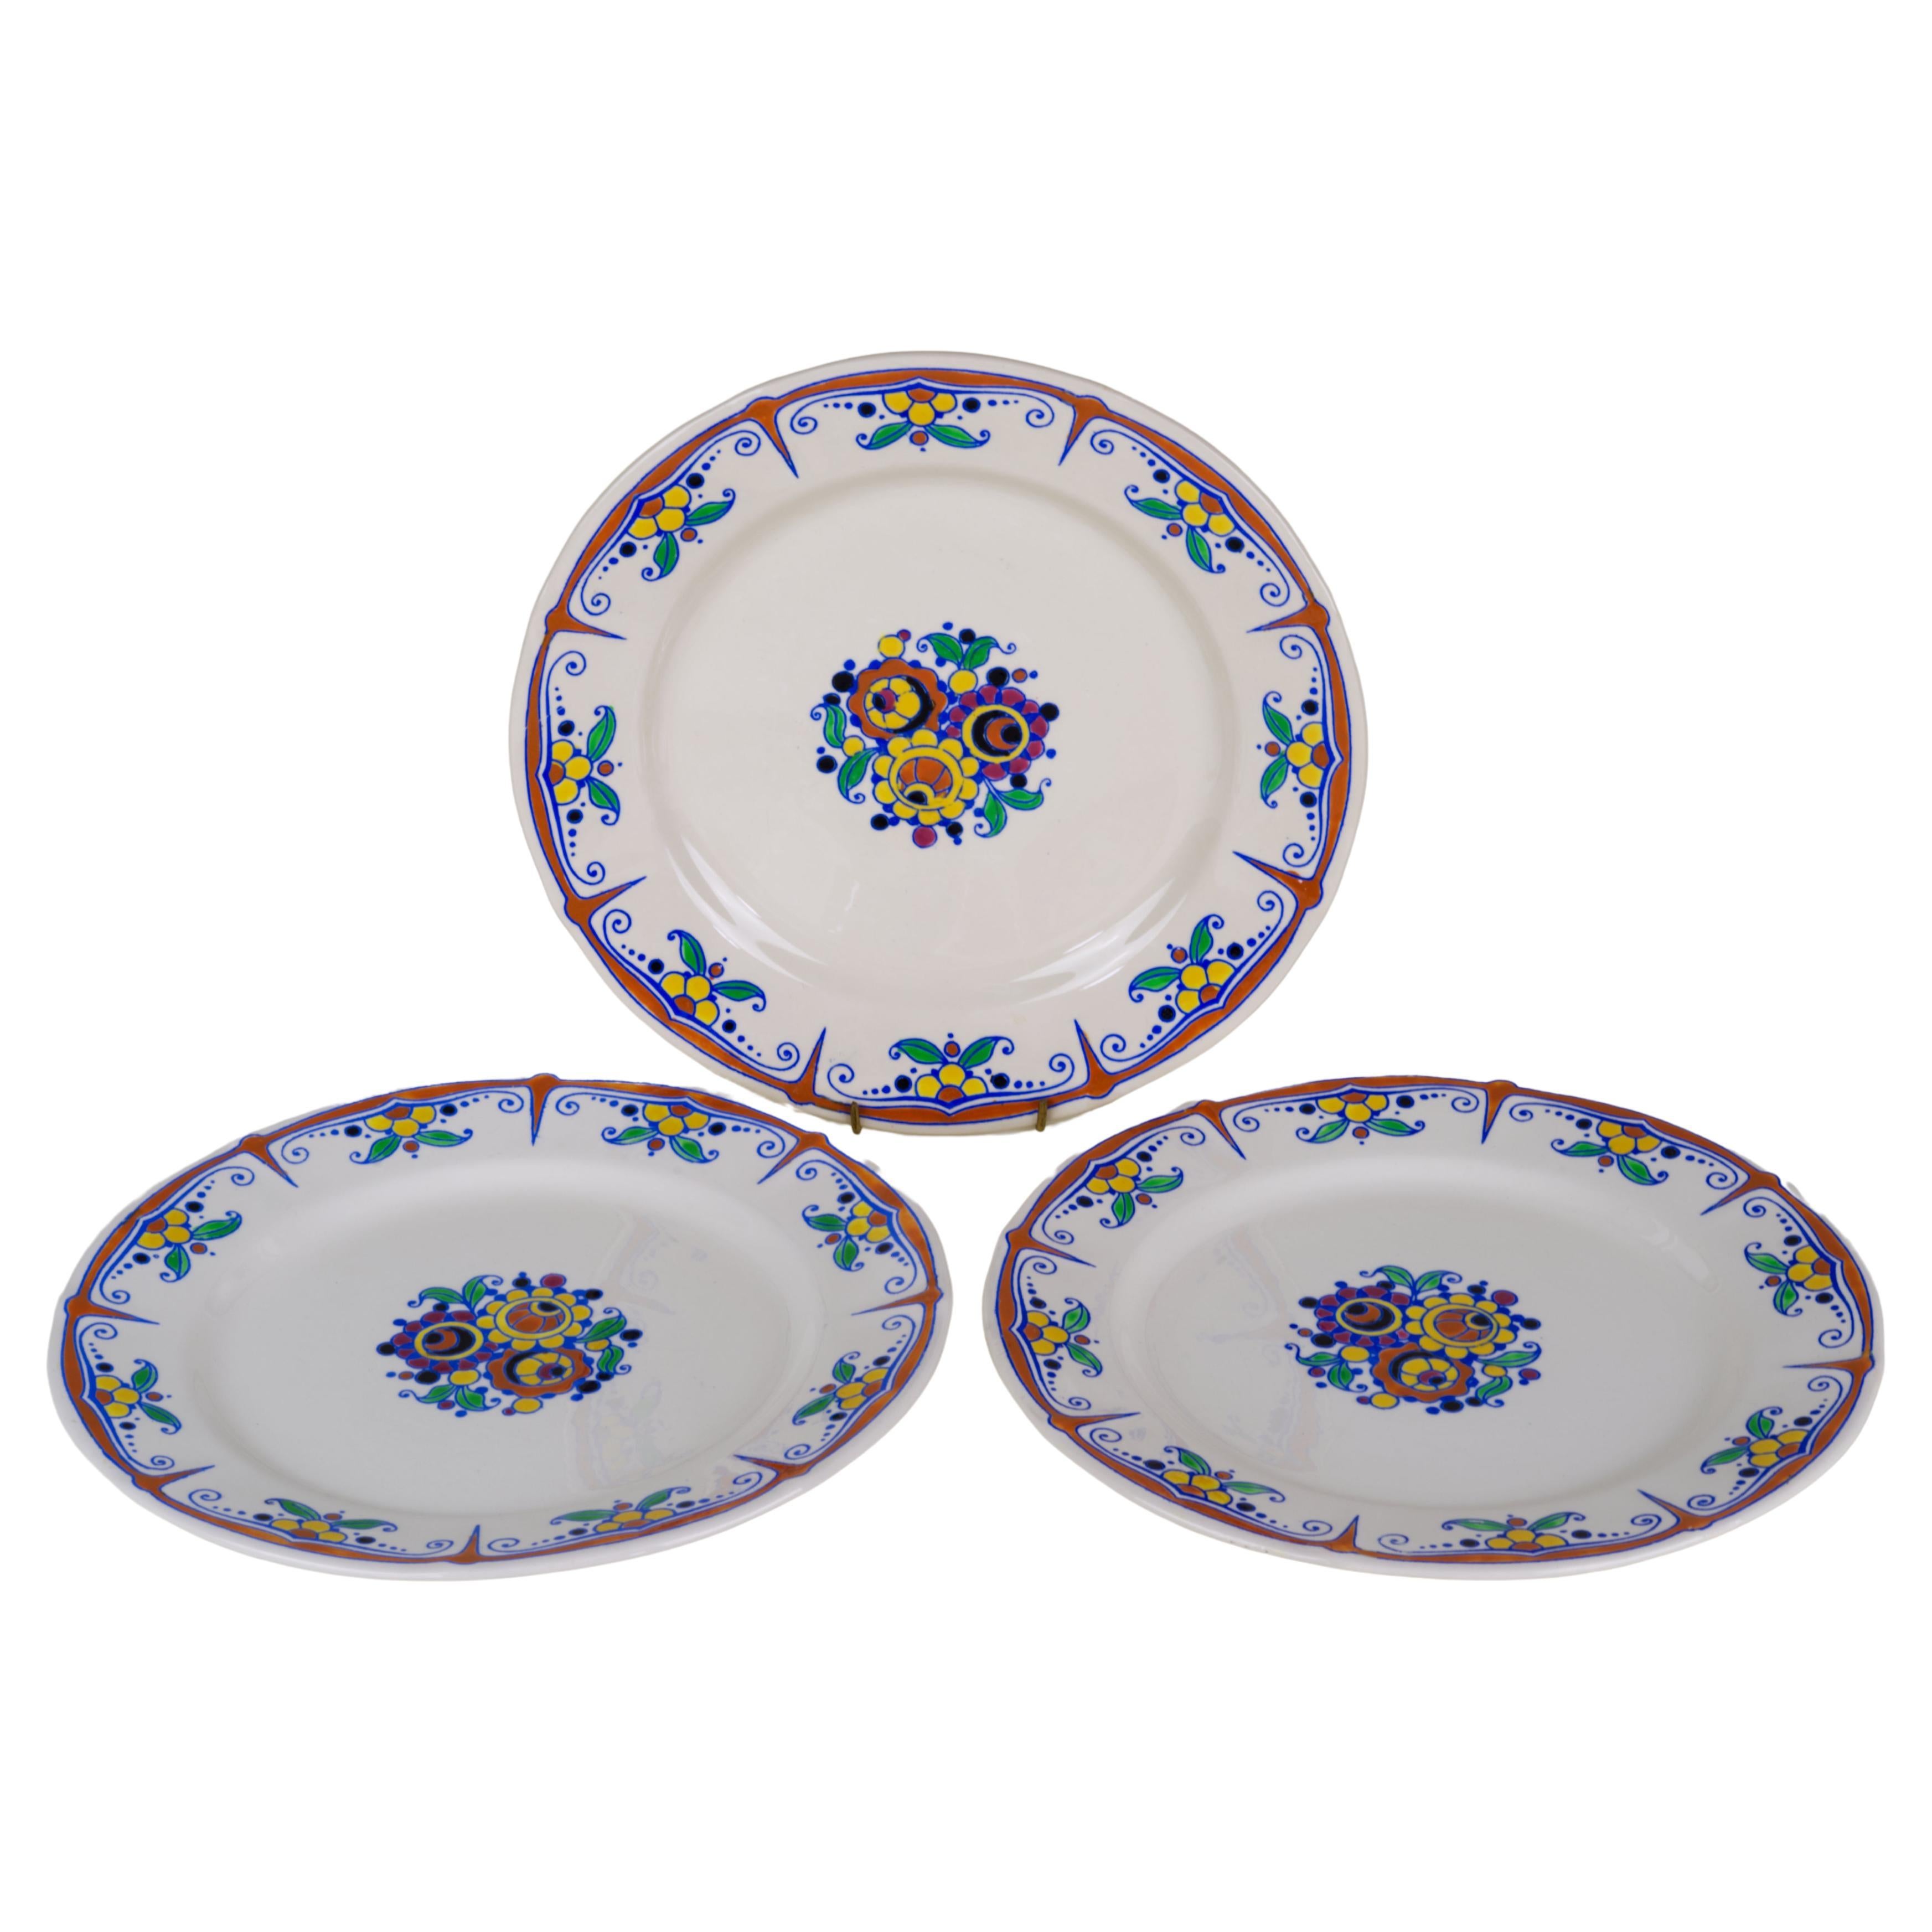 Charles Catteau for Boch Freres Keramis, Belgium, Set of 3 ArtDeco Dinner plates